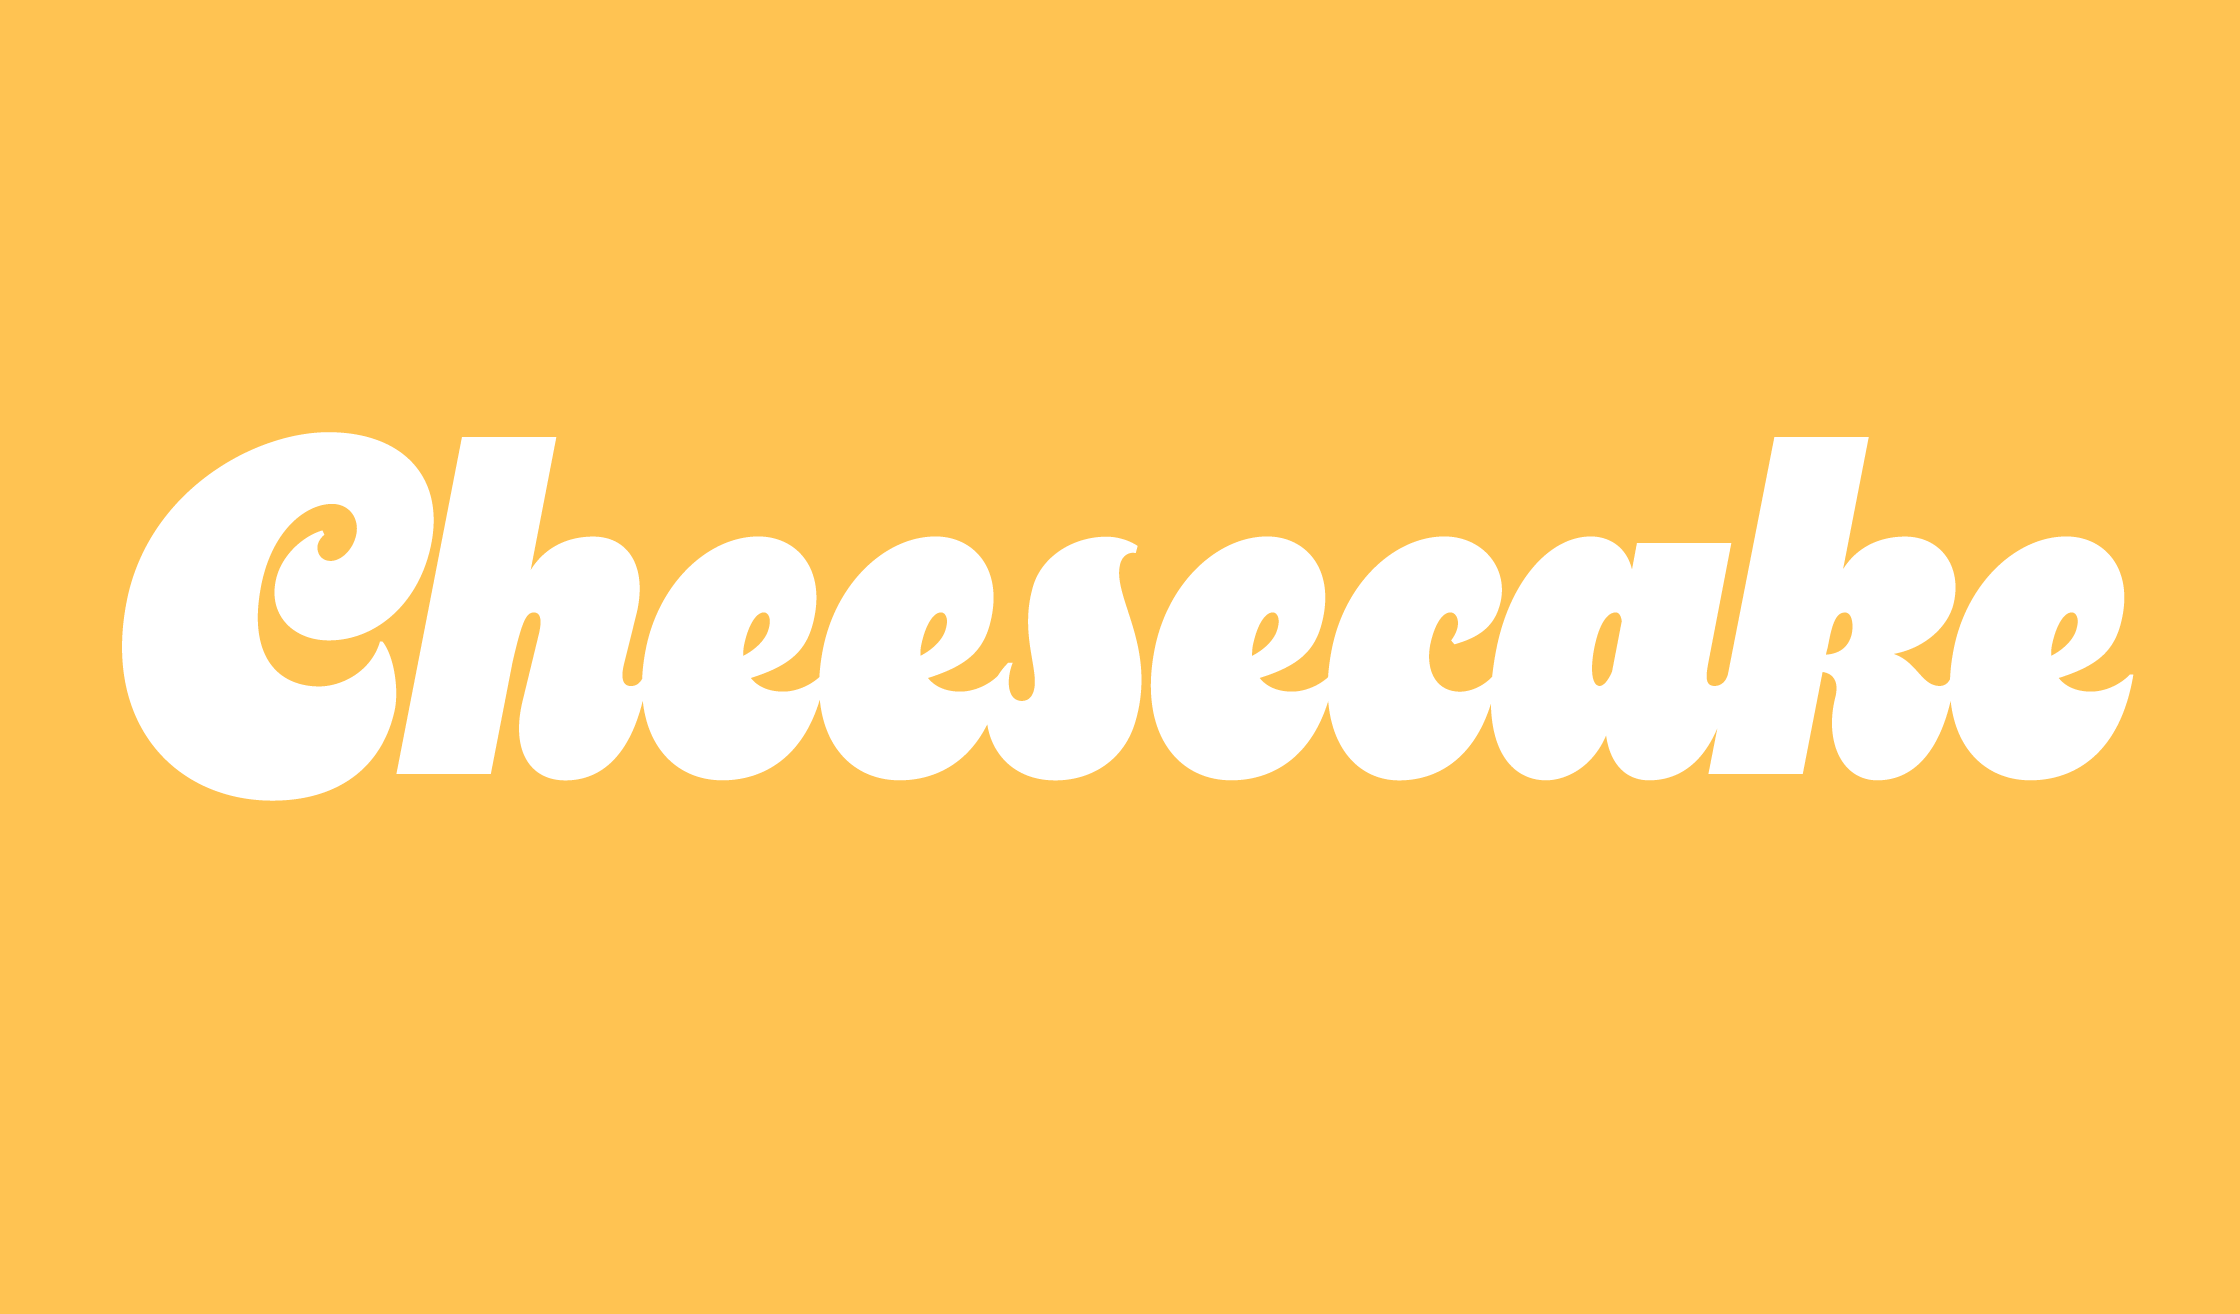 Cheesecake Banner 1 2240X1314